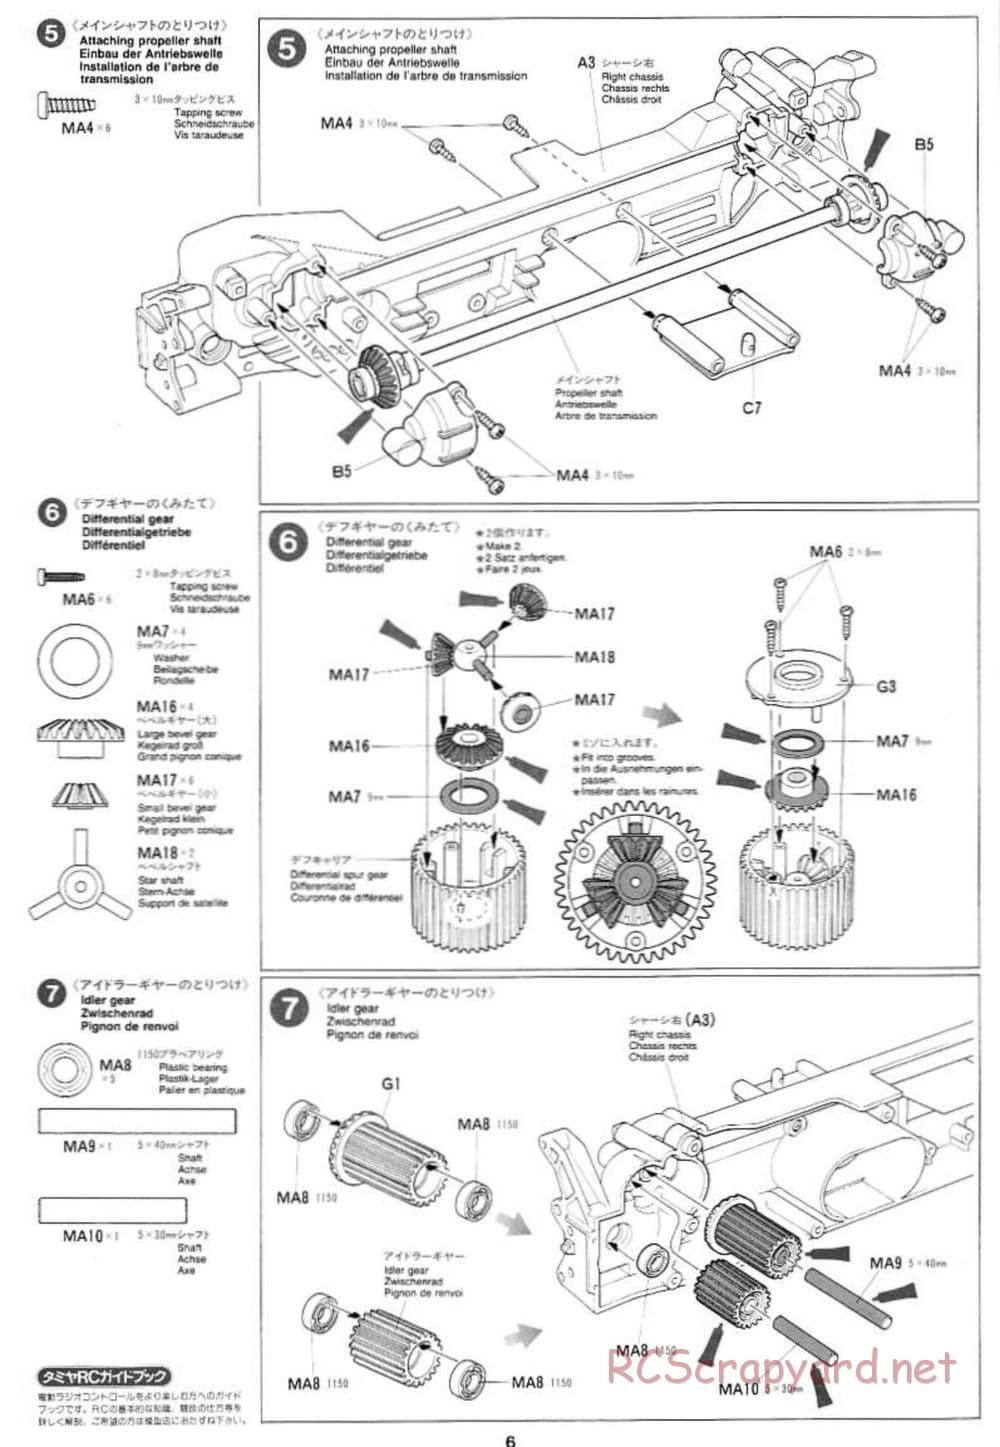 Tamiya - Ford Escort WRC - TL-01 Chassis - Manual - Page 6